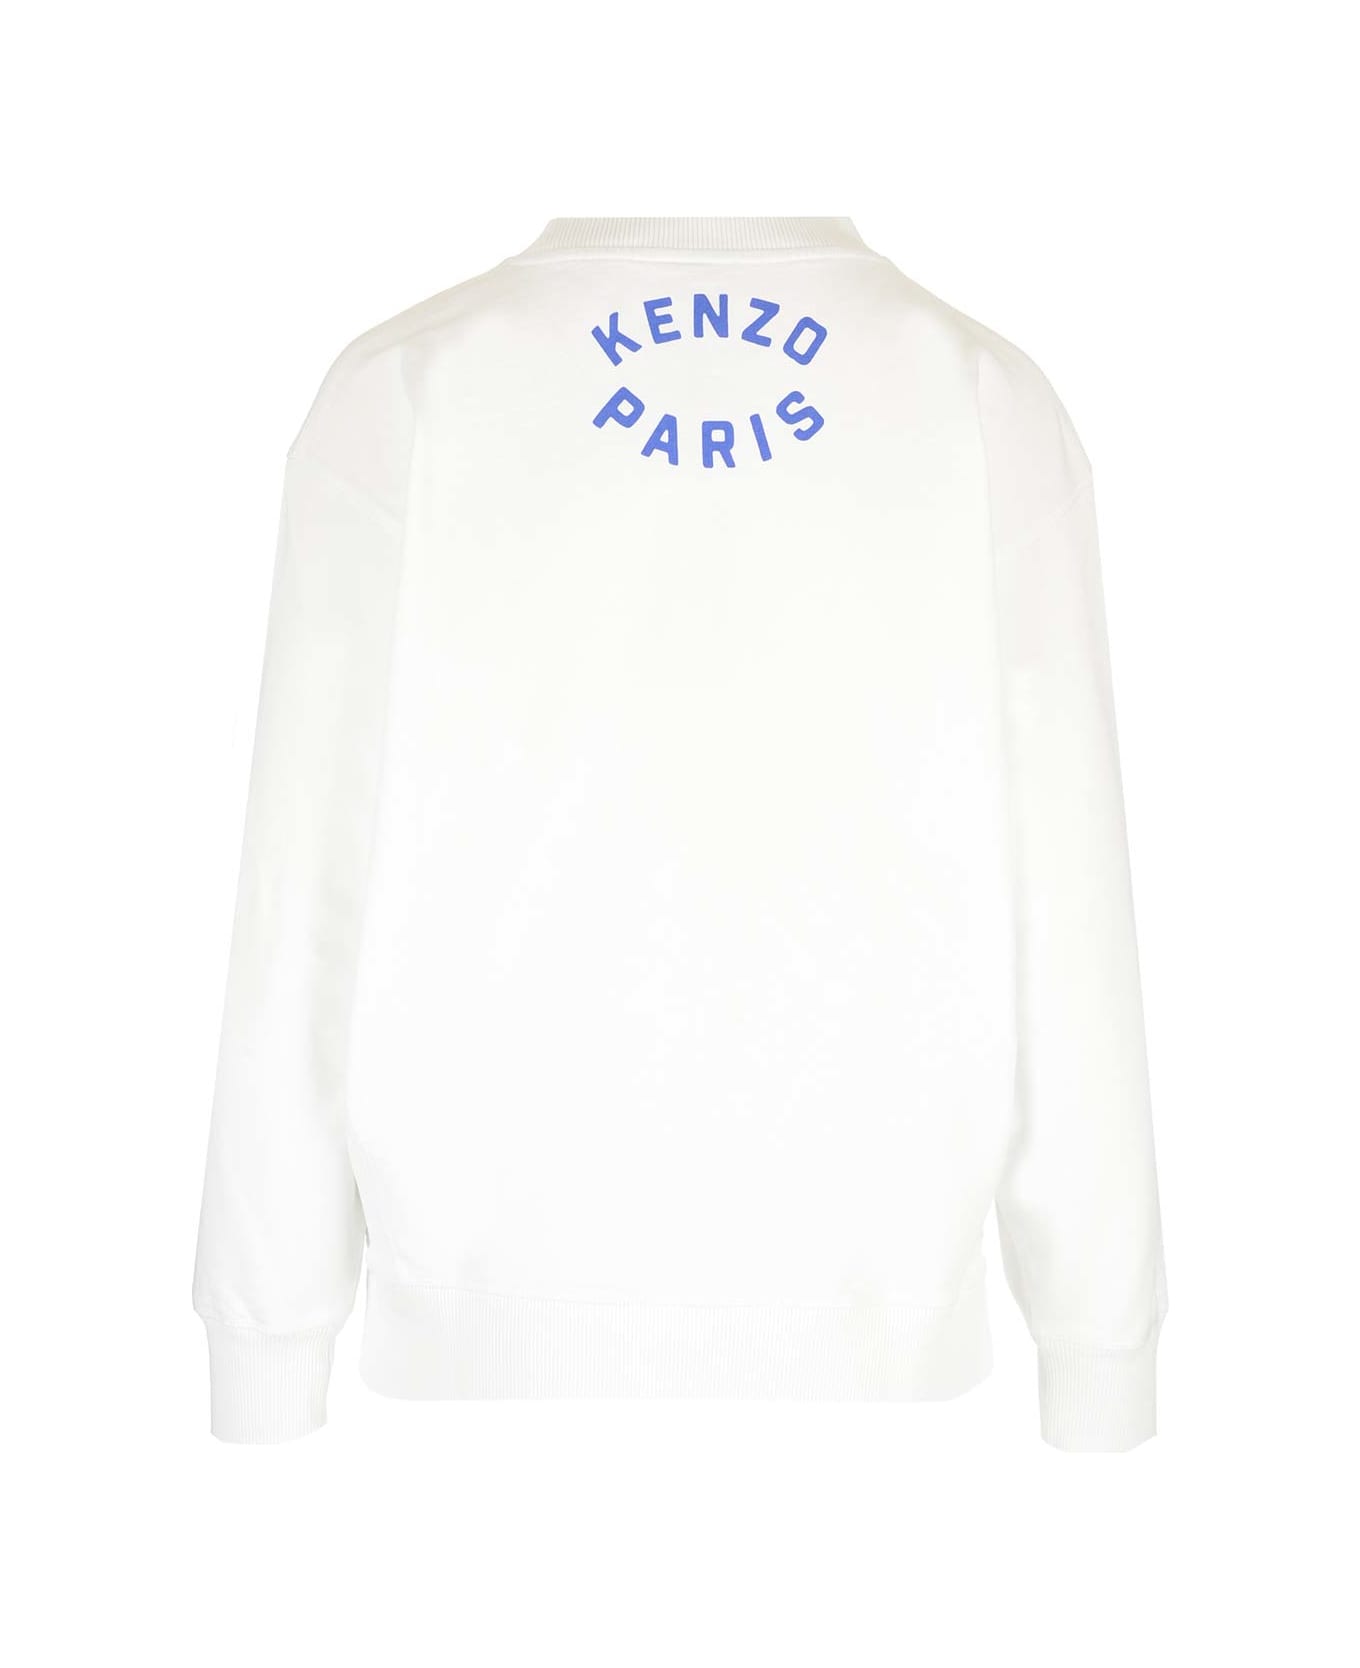 Kenzo Printed Sweatshirt - White